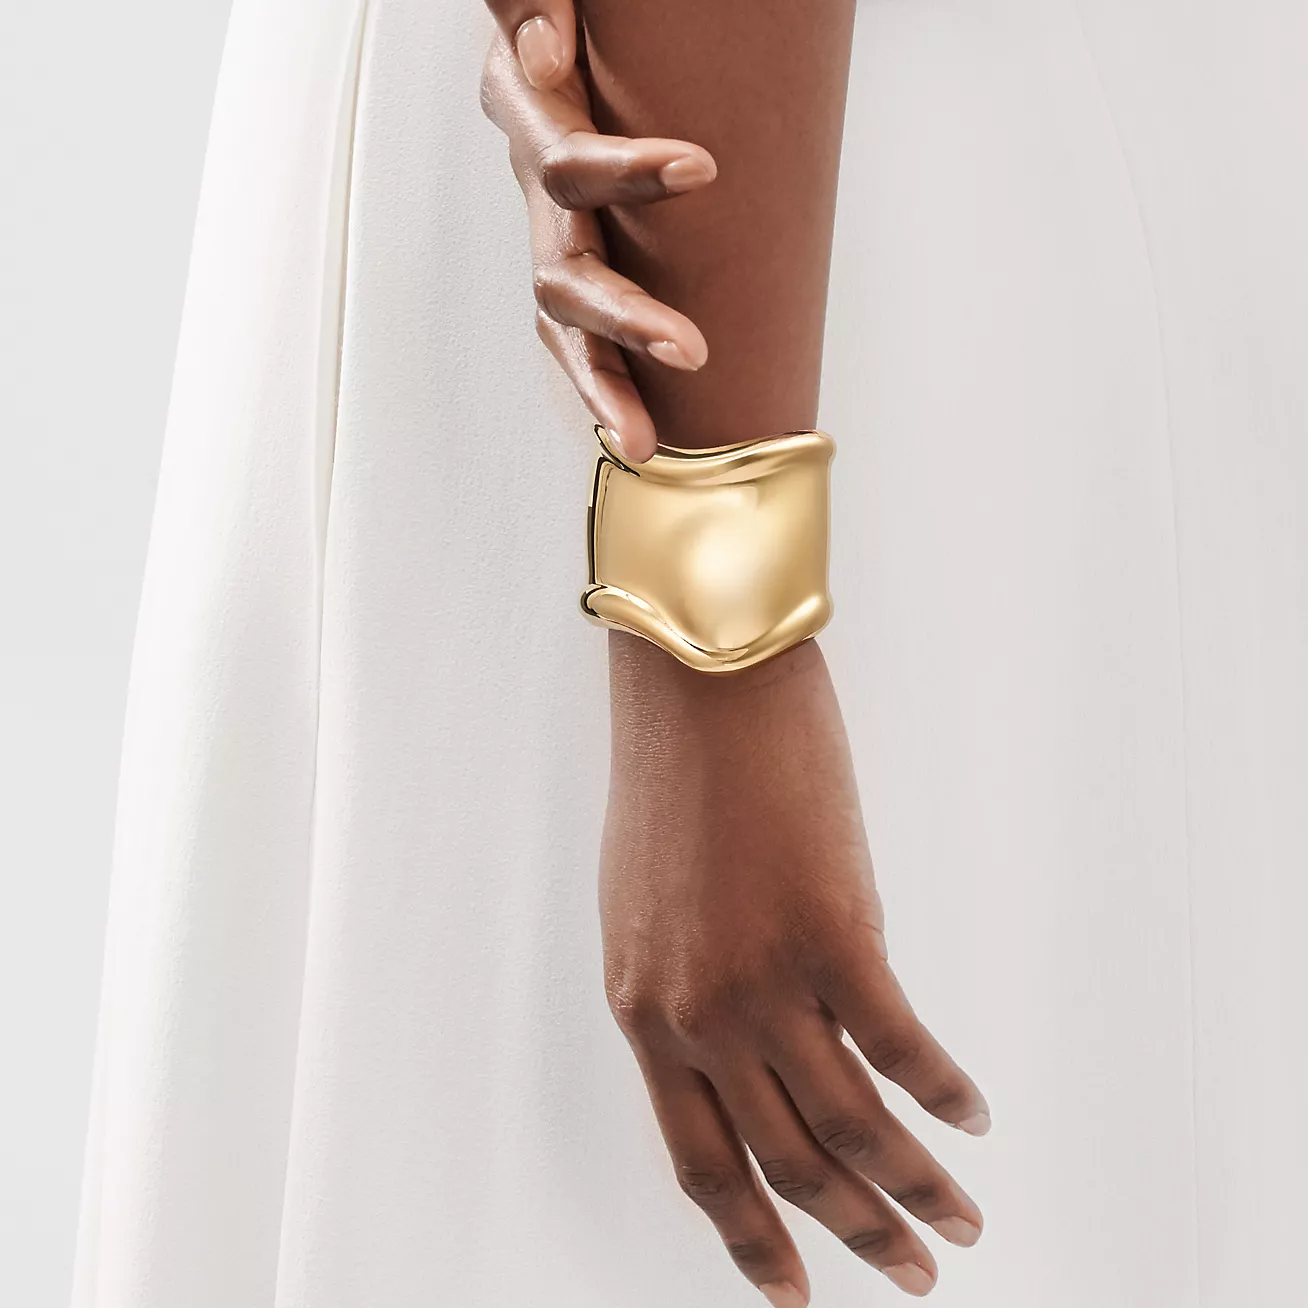 Gold Asymmetrical Hair Cuff Bracelet for Locs